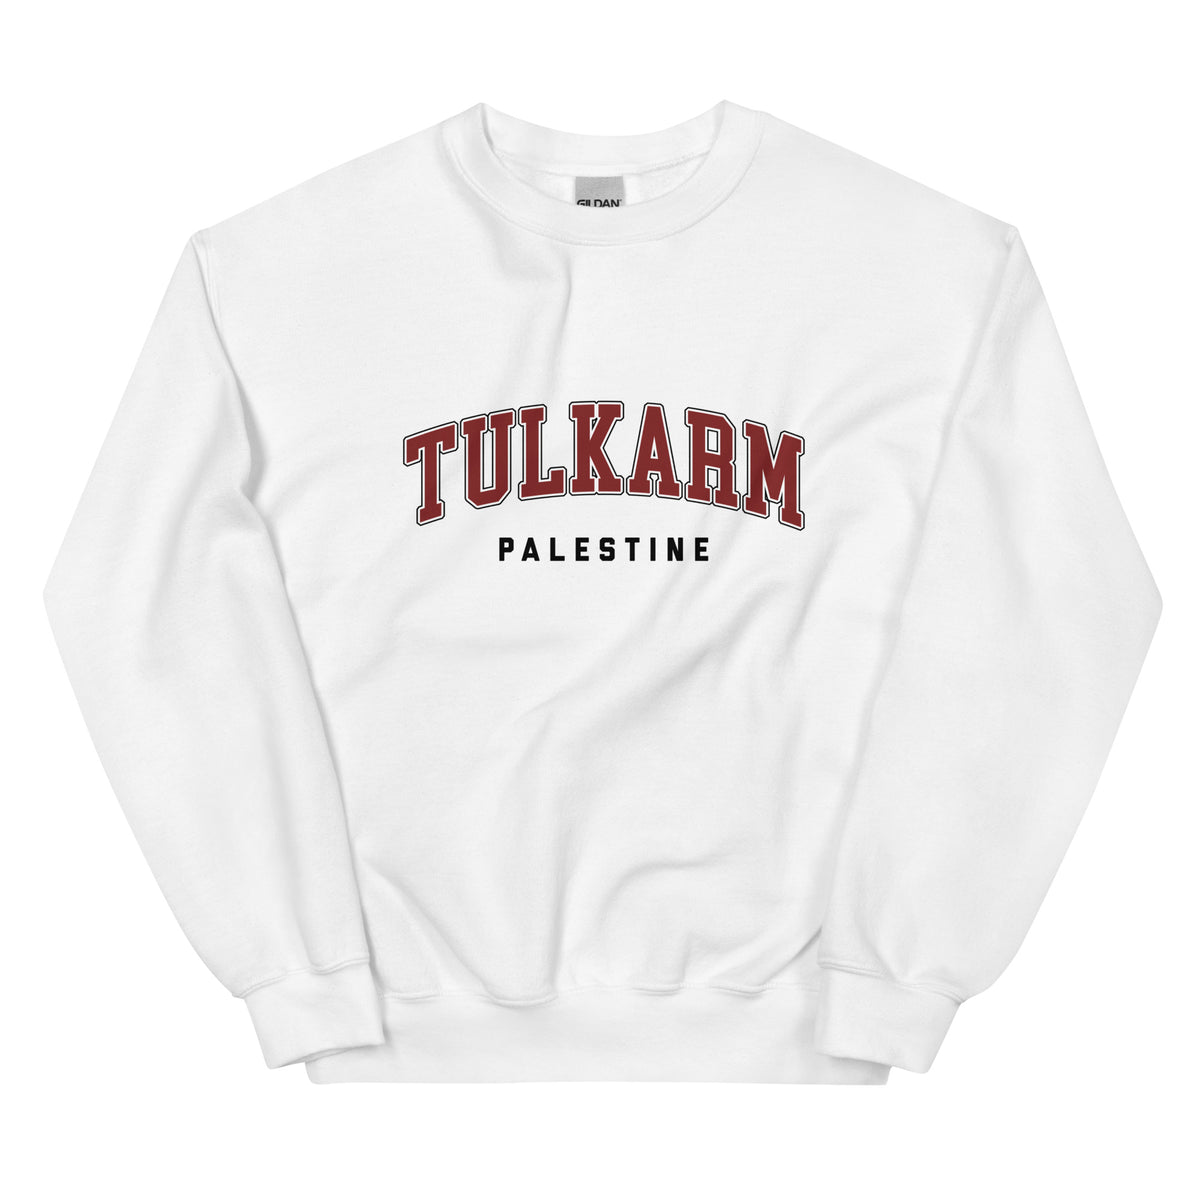 Tulkarm, Palestine - Sweatshirt